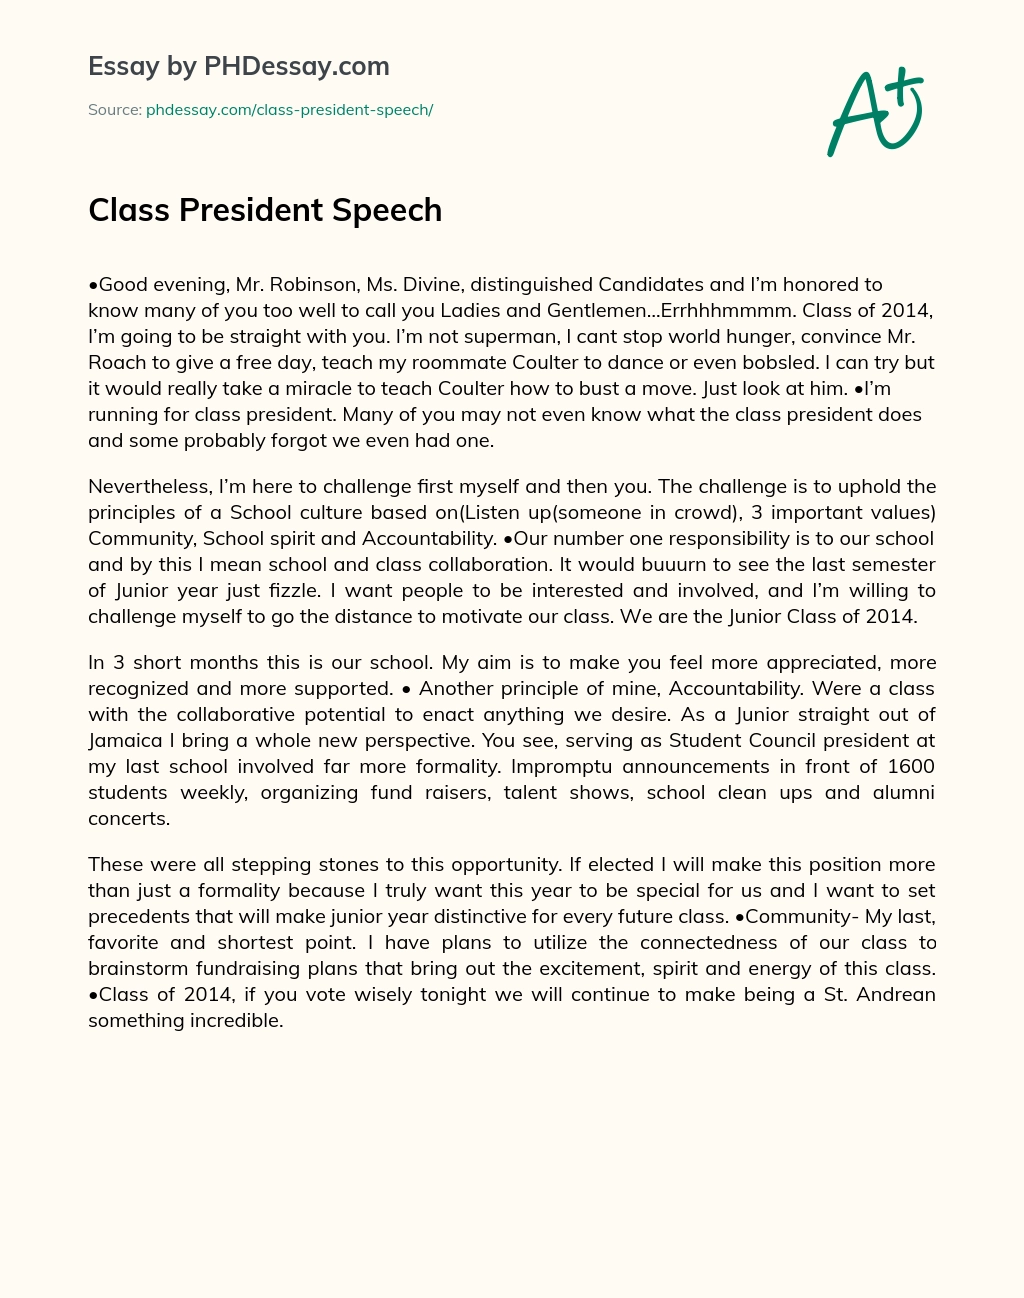 Class President Speech Phdessay Com